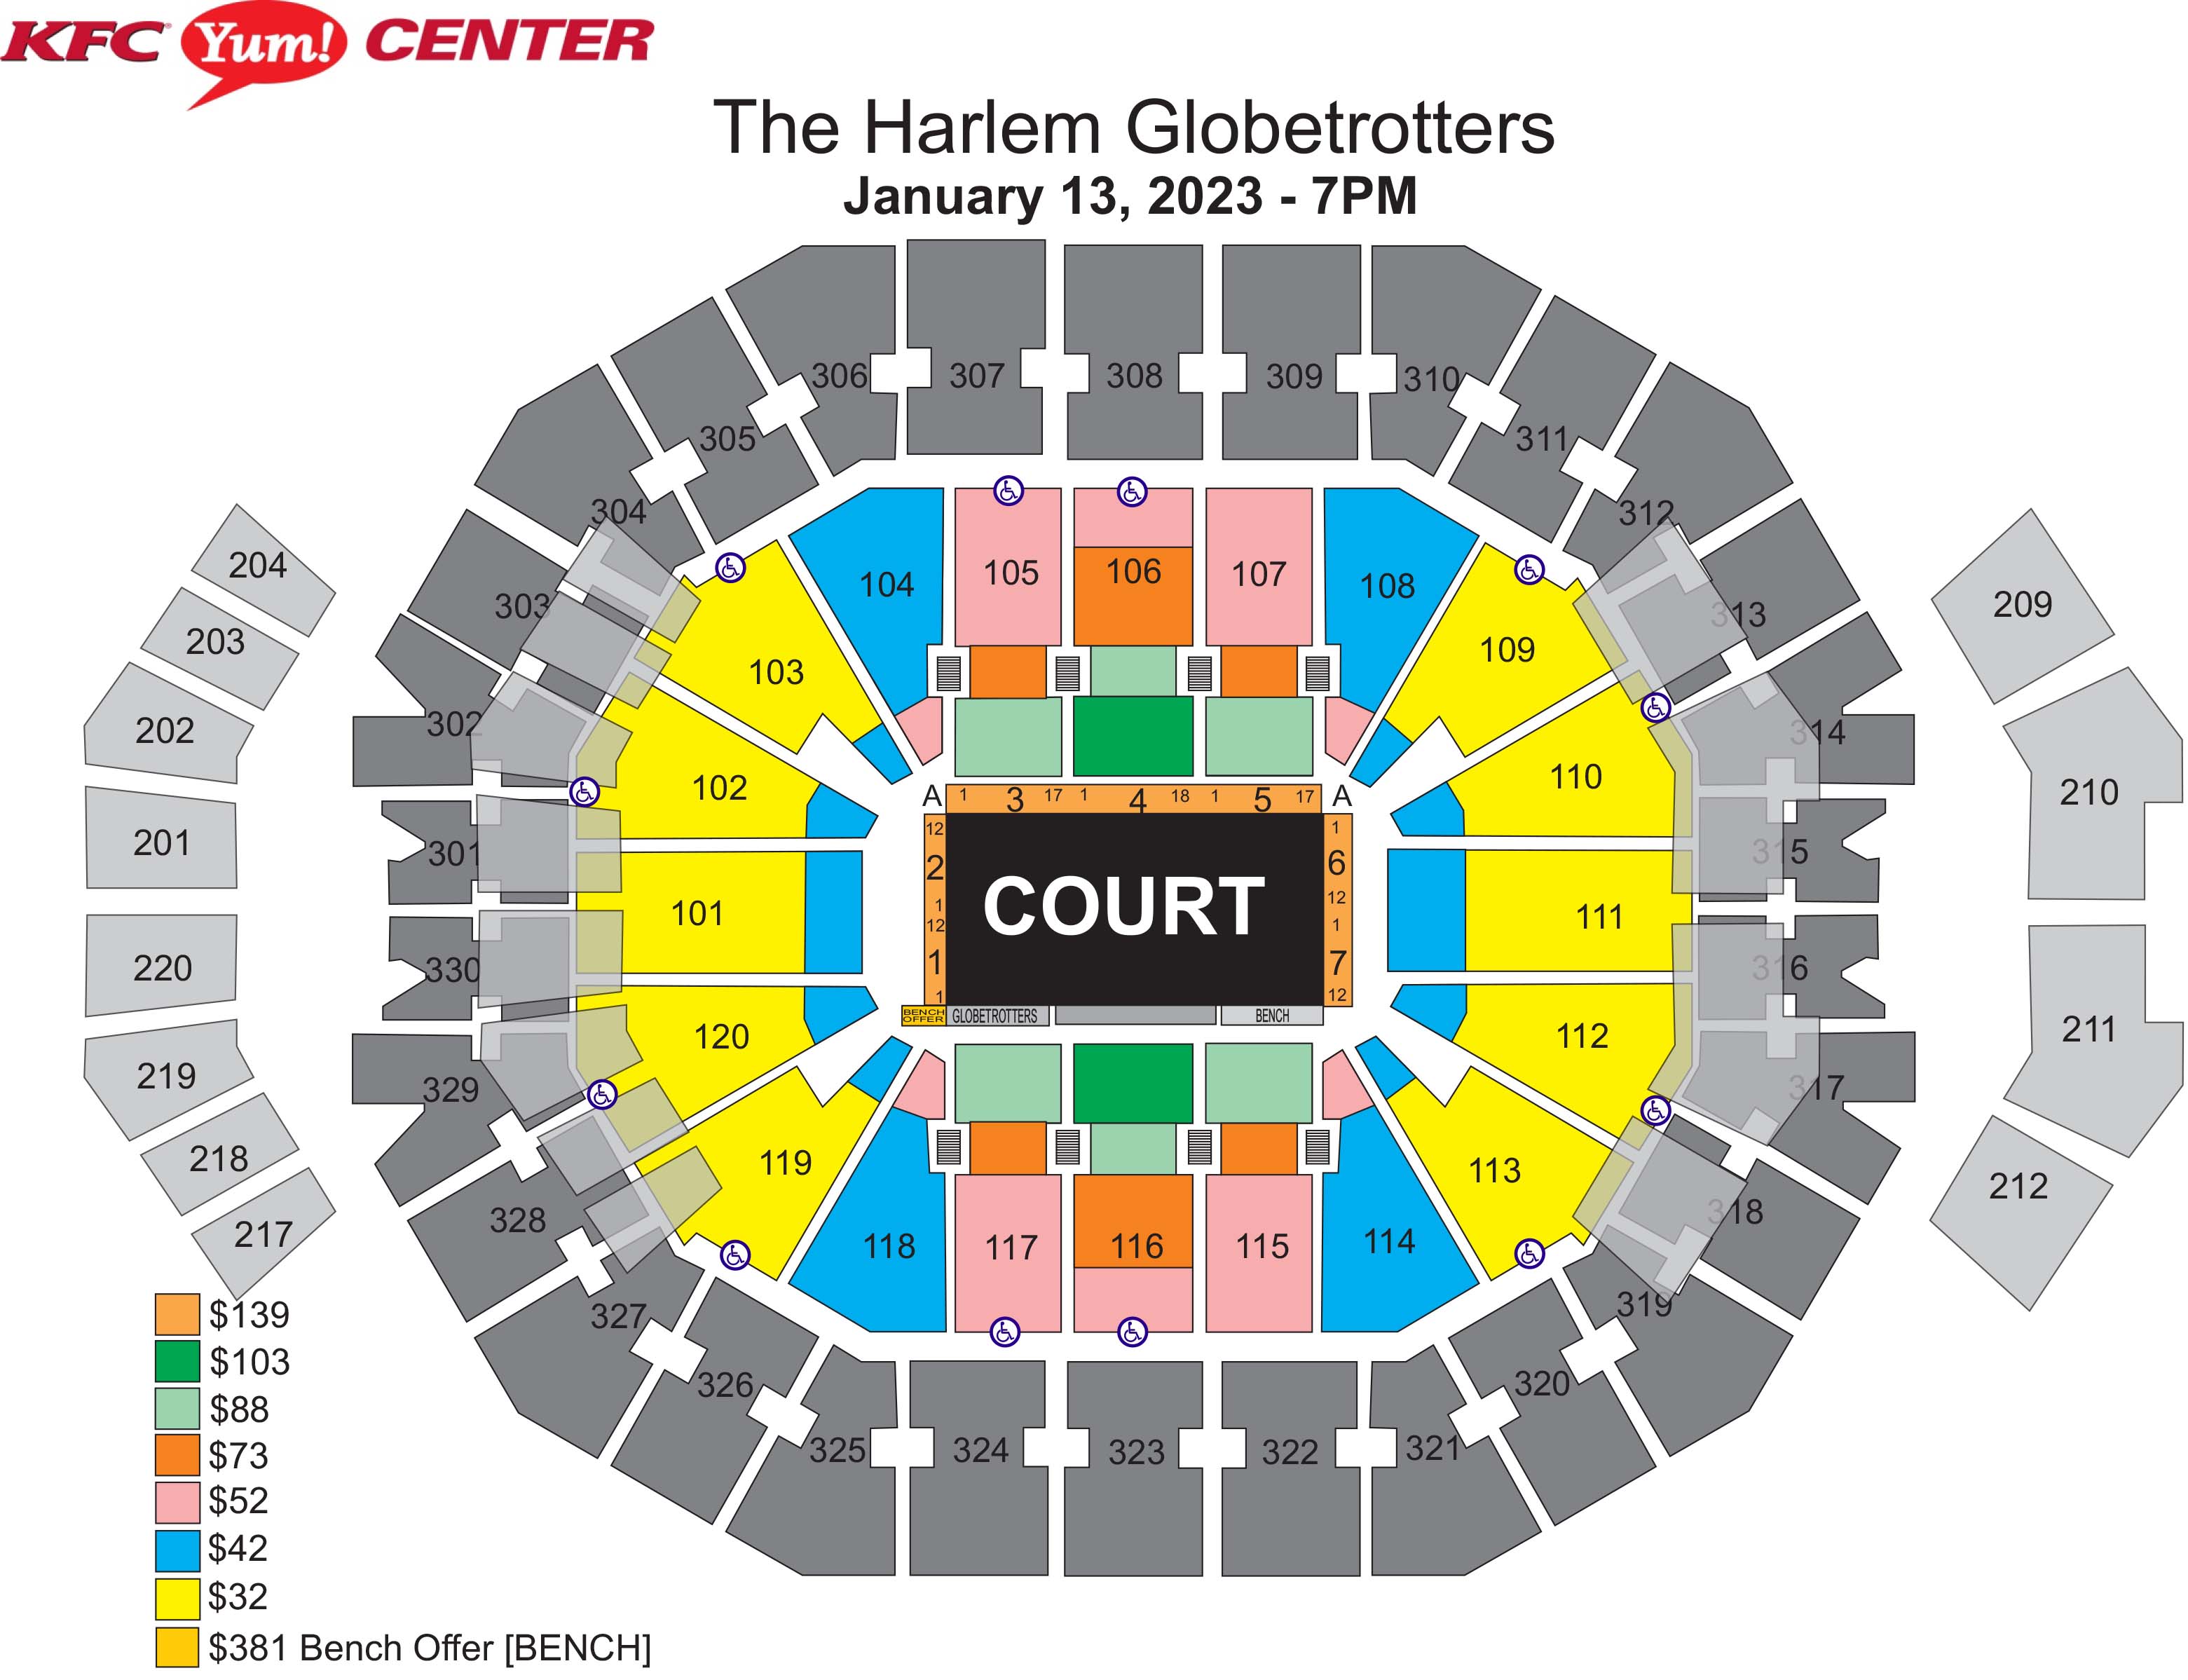 The Harlem Globetrotters Return to Cincinnati in December for 2023